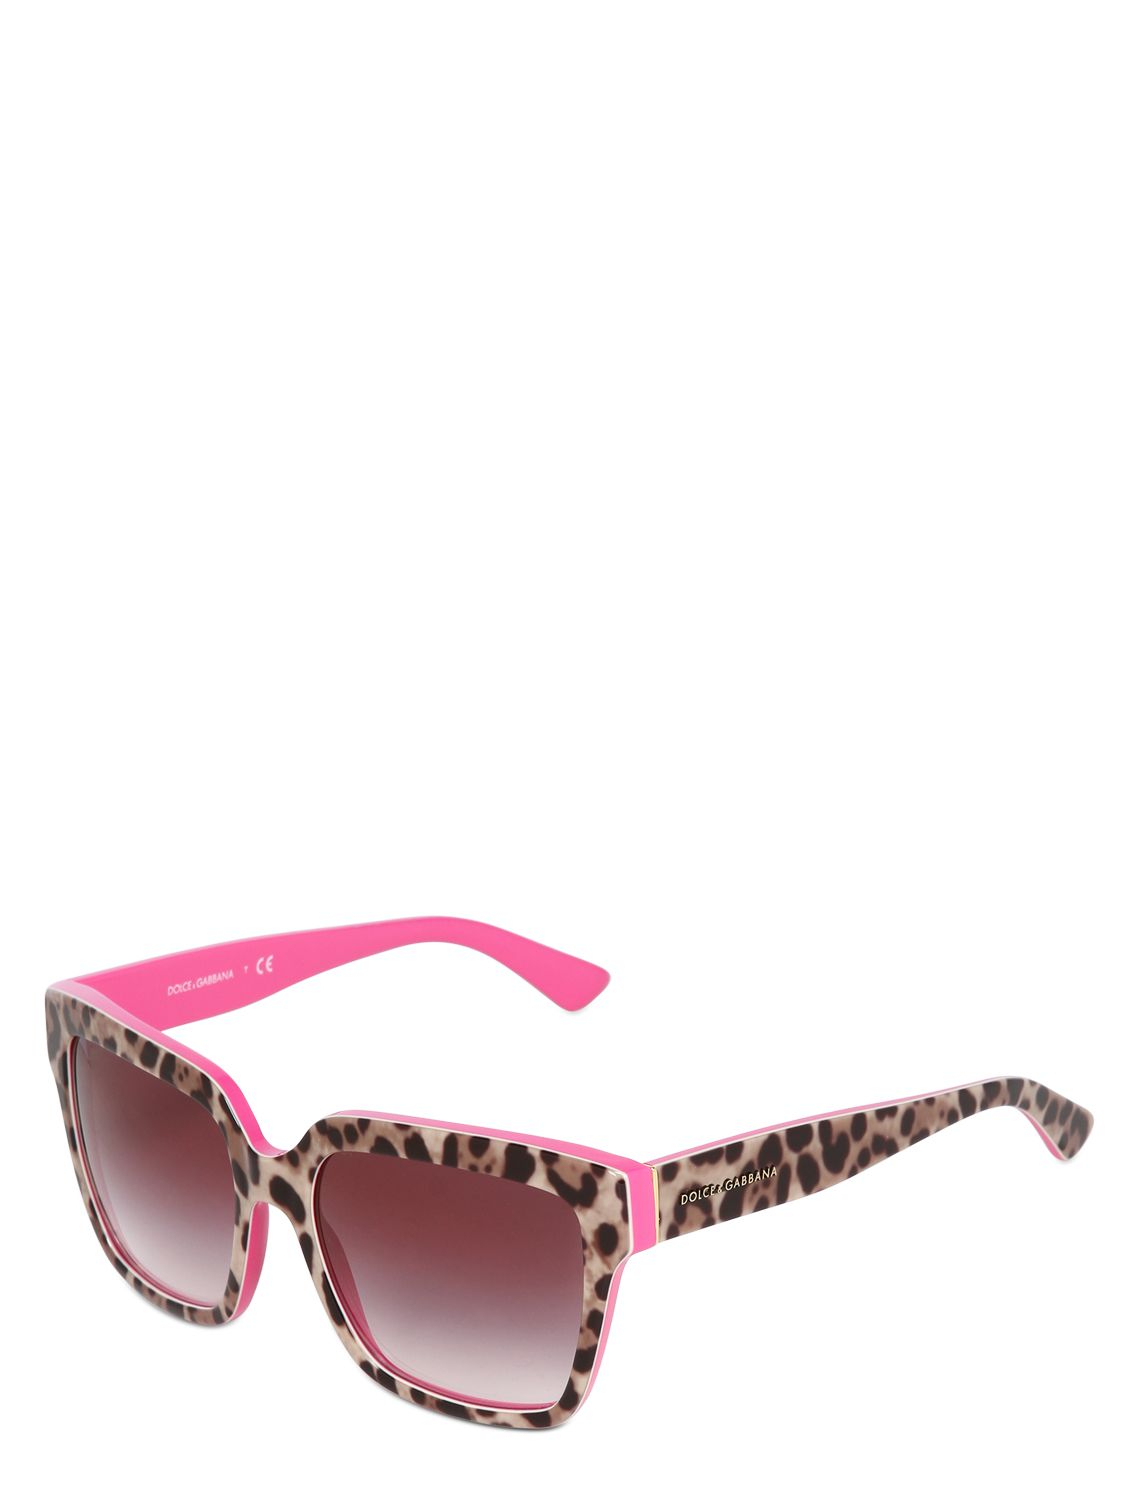 Dolce & Gabbana Squared Leopard Printed Sunglasses in Pink | Lyst